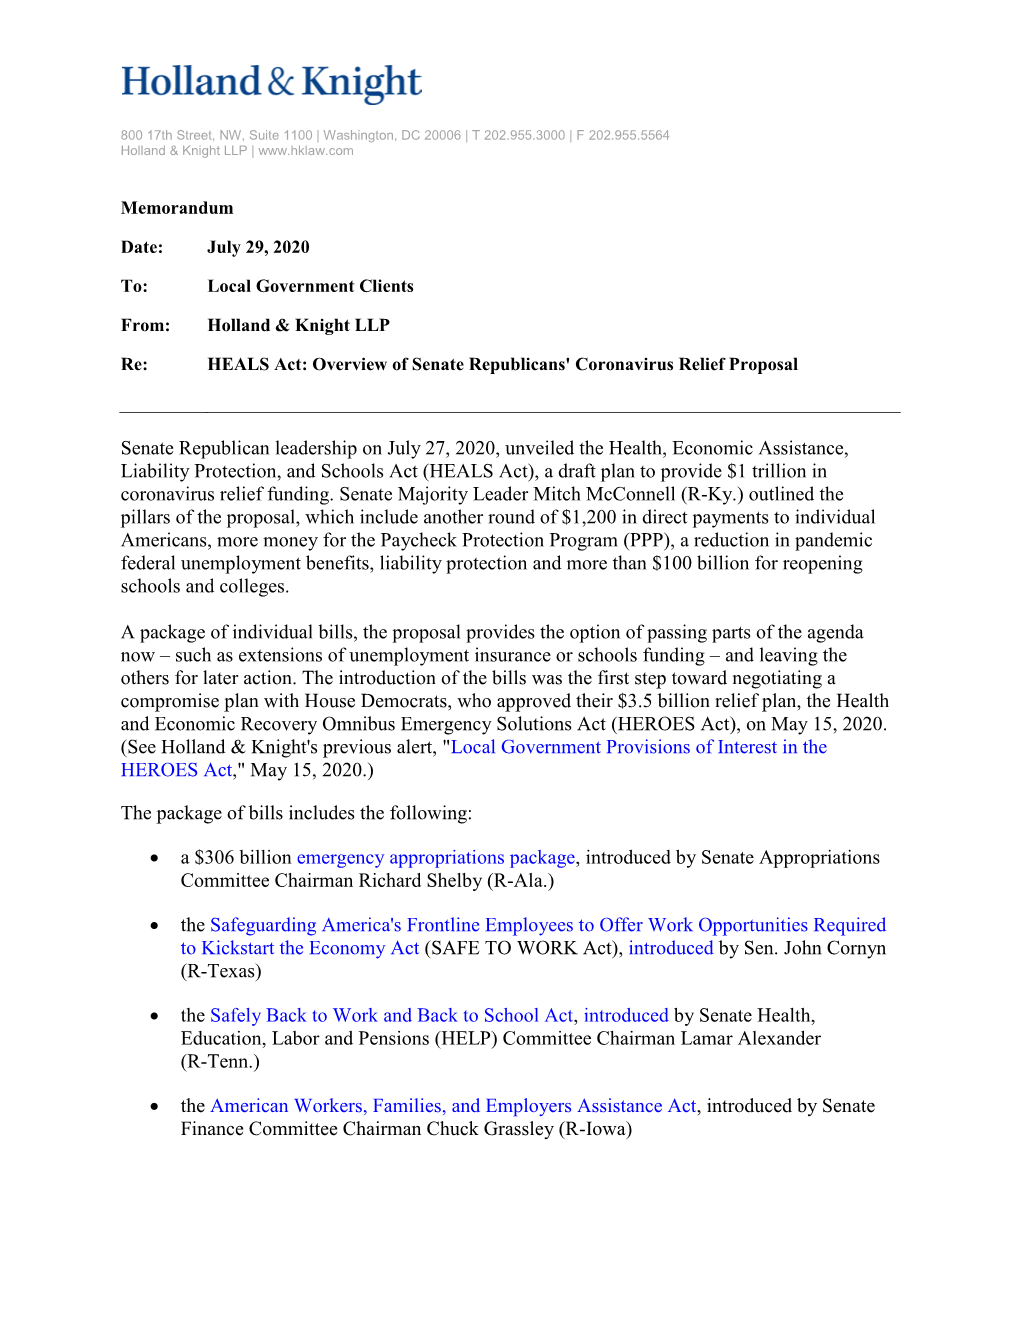 HEALS Act: Overview of Senate Republicans' Coronavirus Relief Proposal